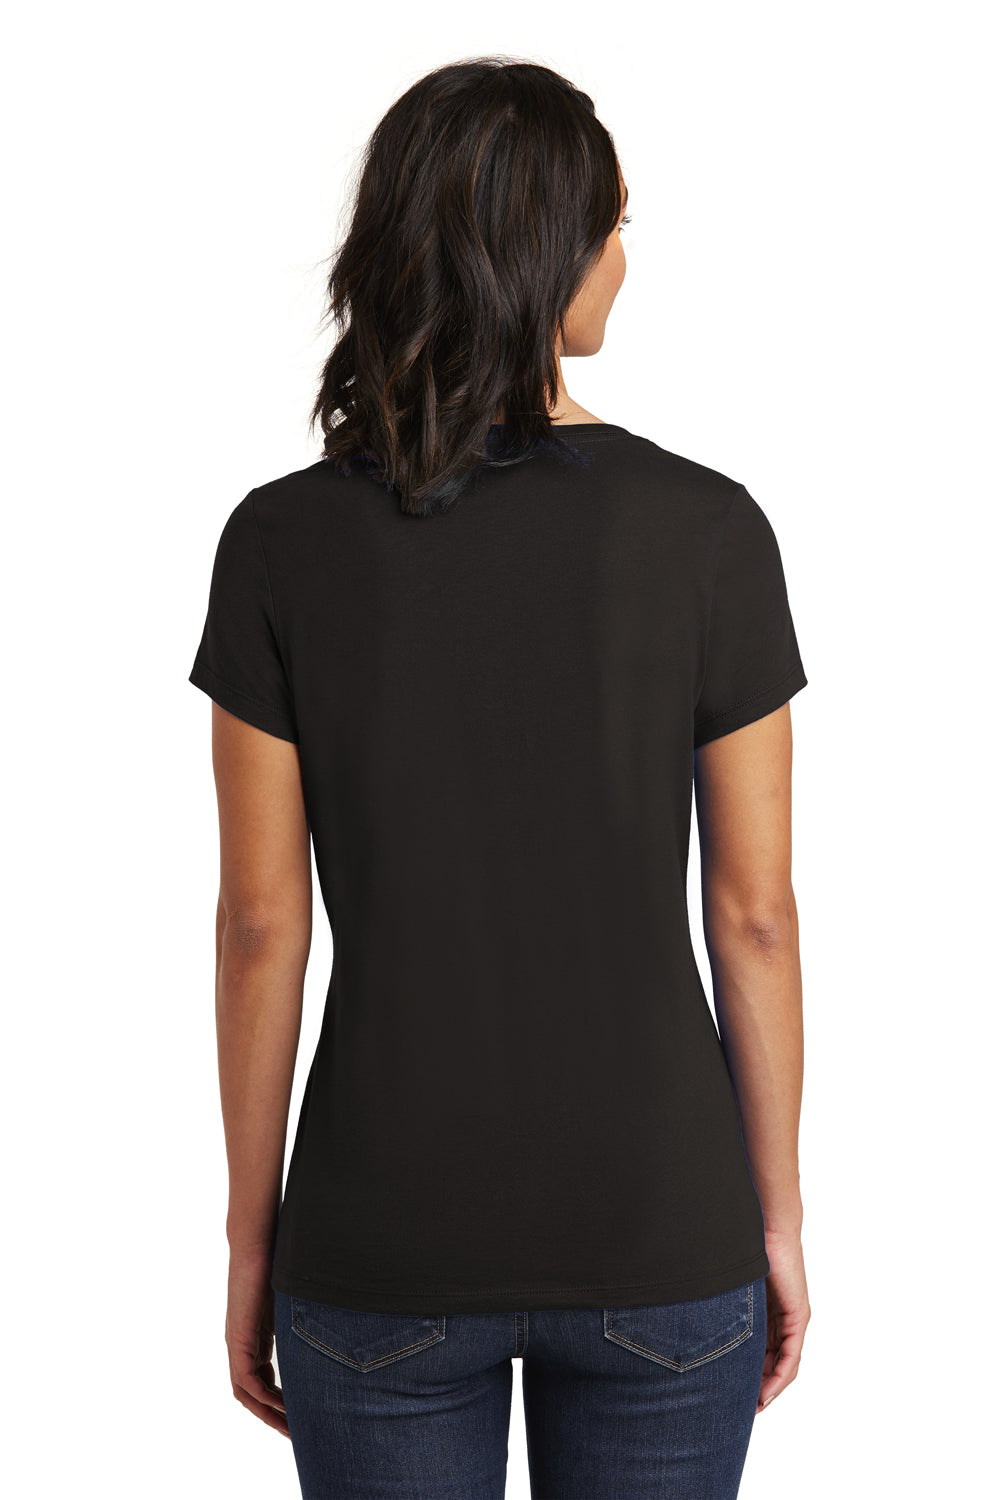 District DT6503 Womens Very Important Short Sleeve V-Neck T-Shirt Black Back